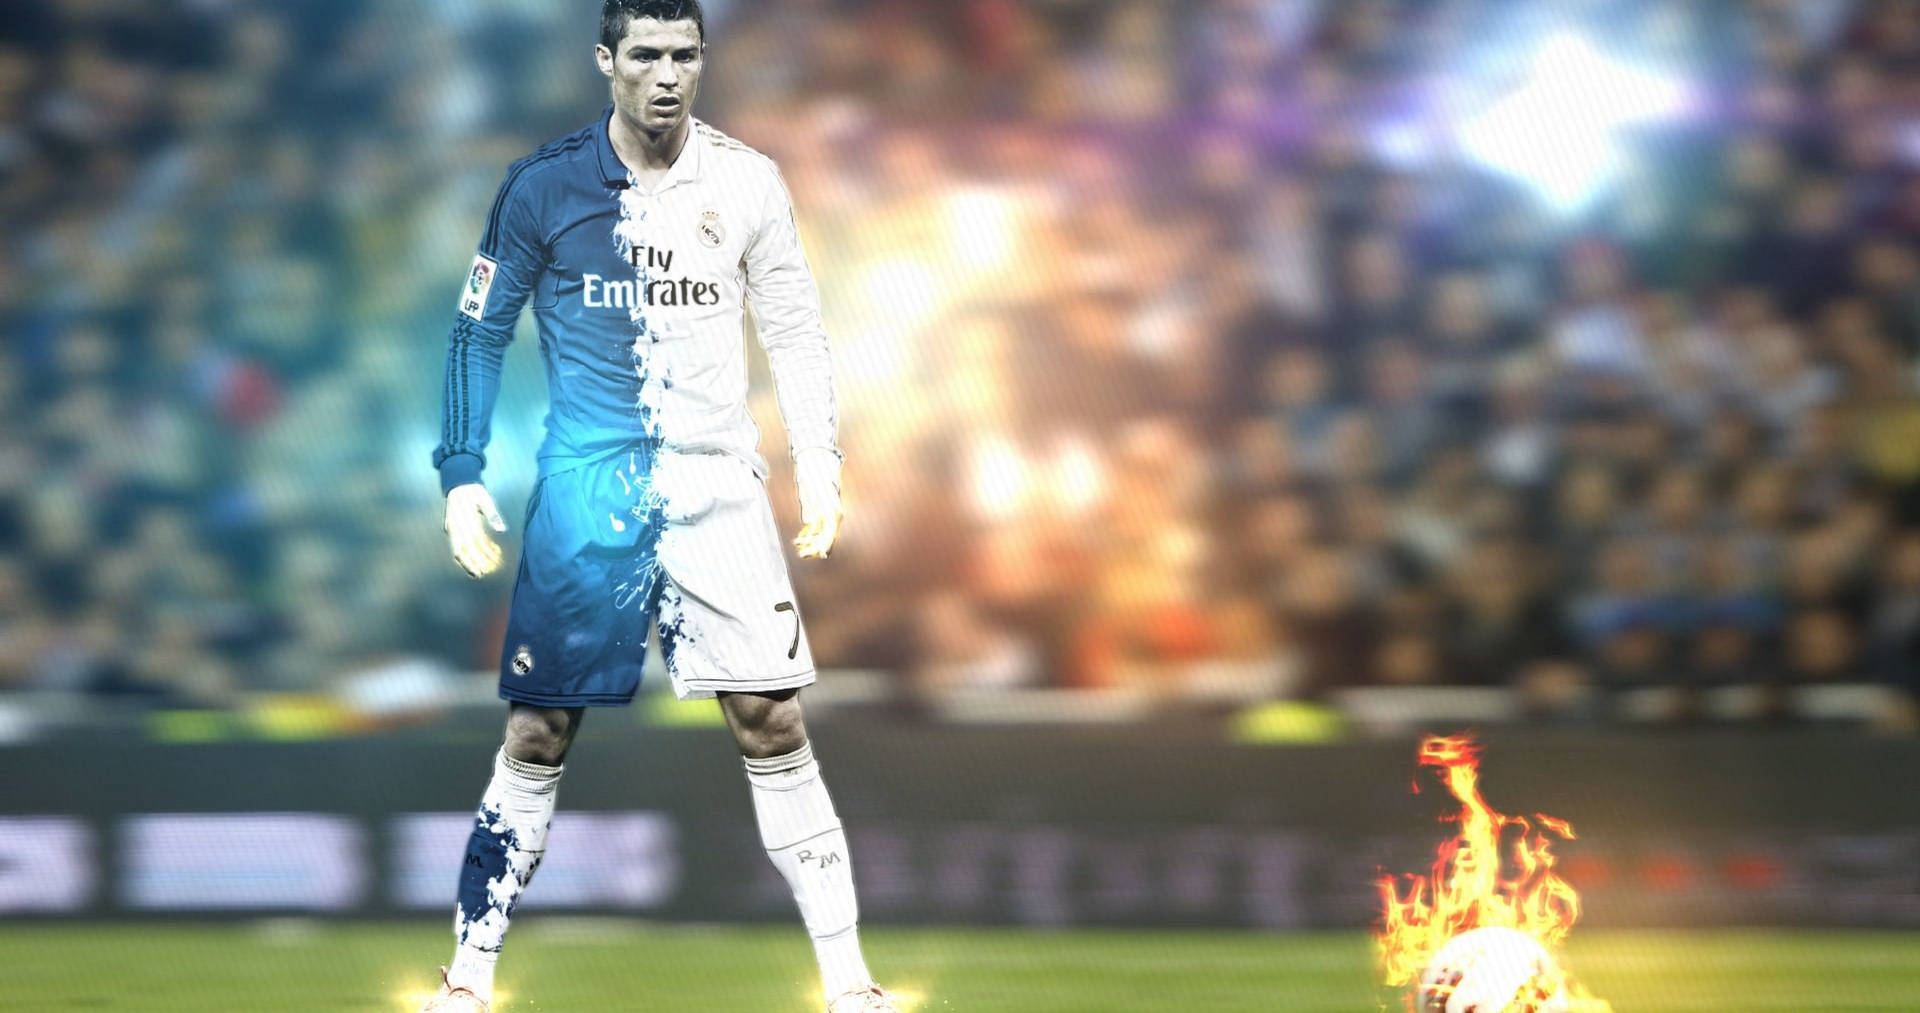 "Cristiano Ronaldo Defiantly Displays His Smoldering Fierce Looks" Wallpaper